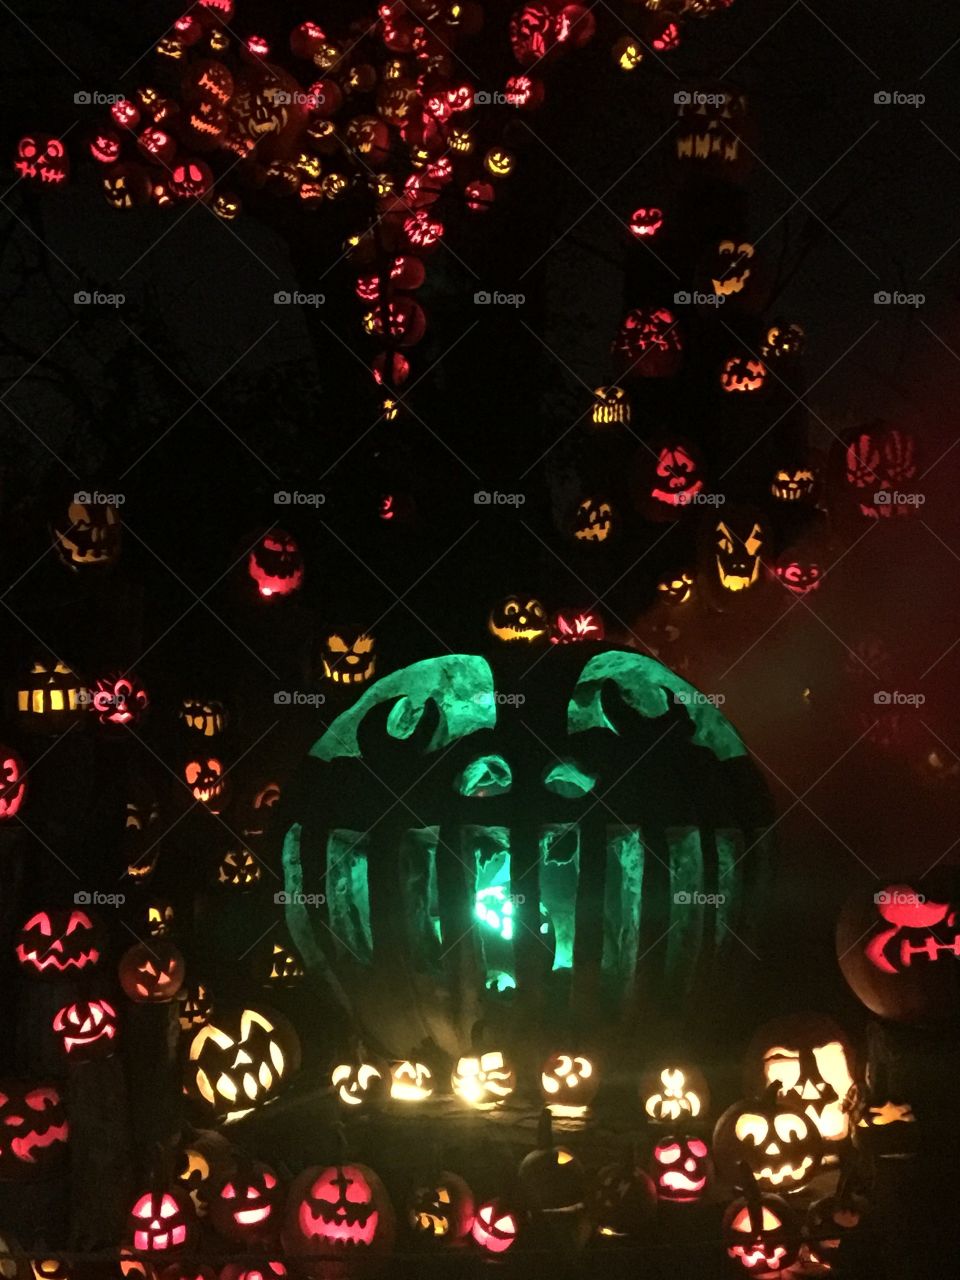 Night of the pumpkins 